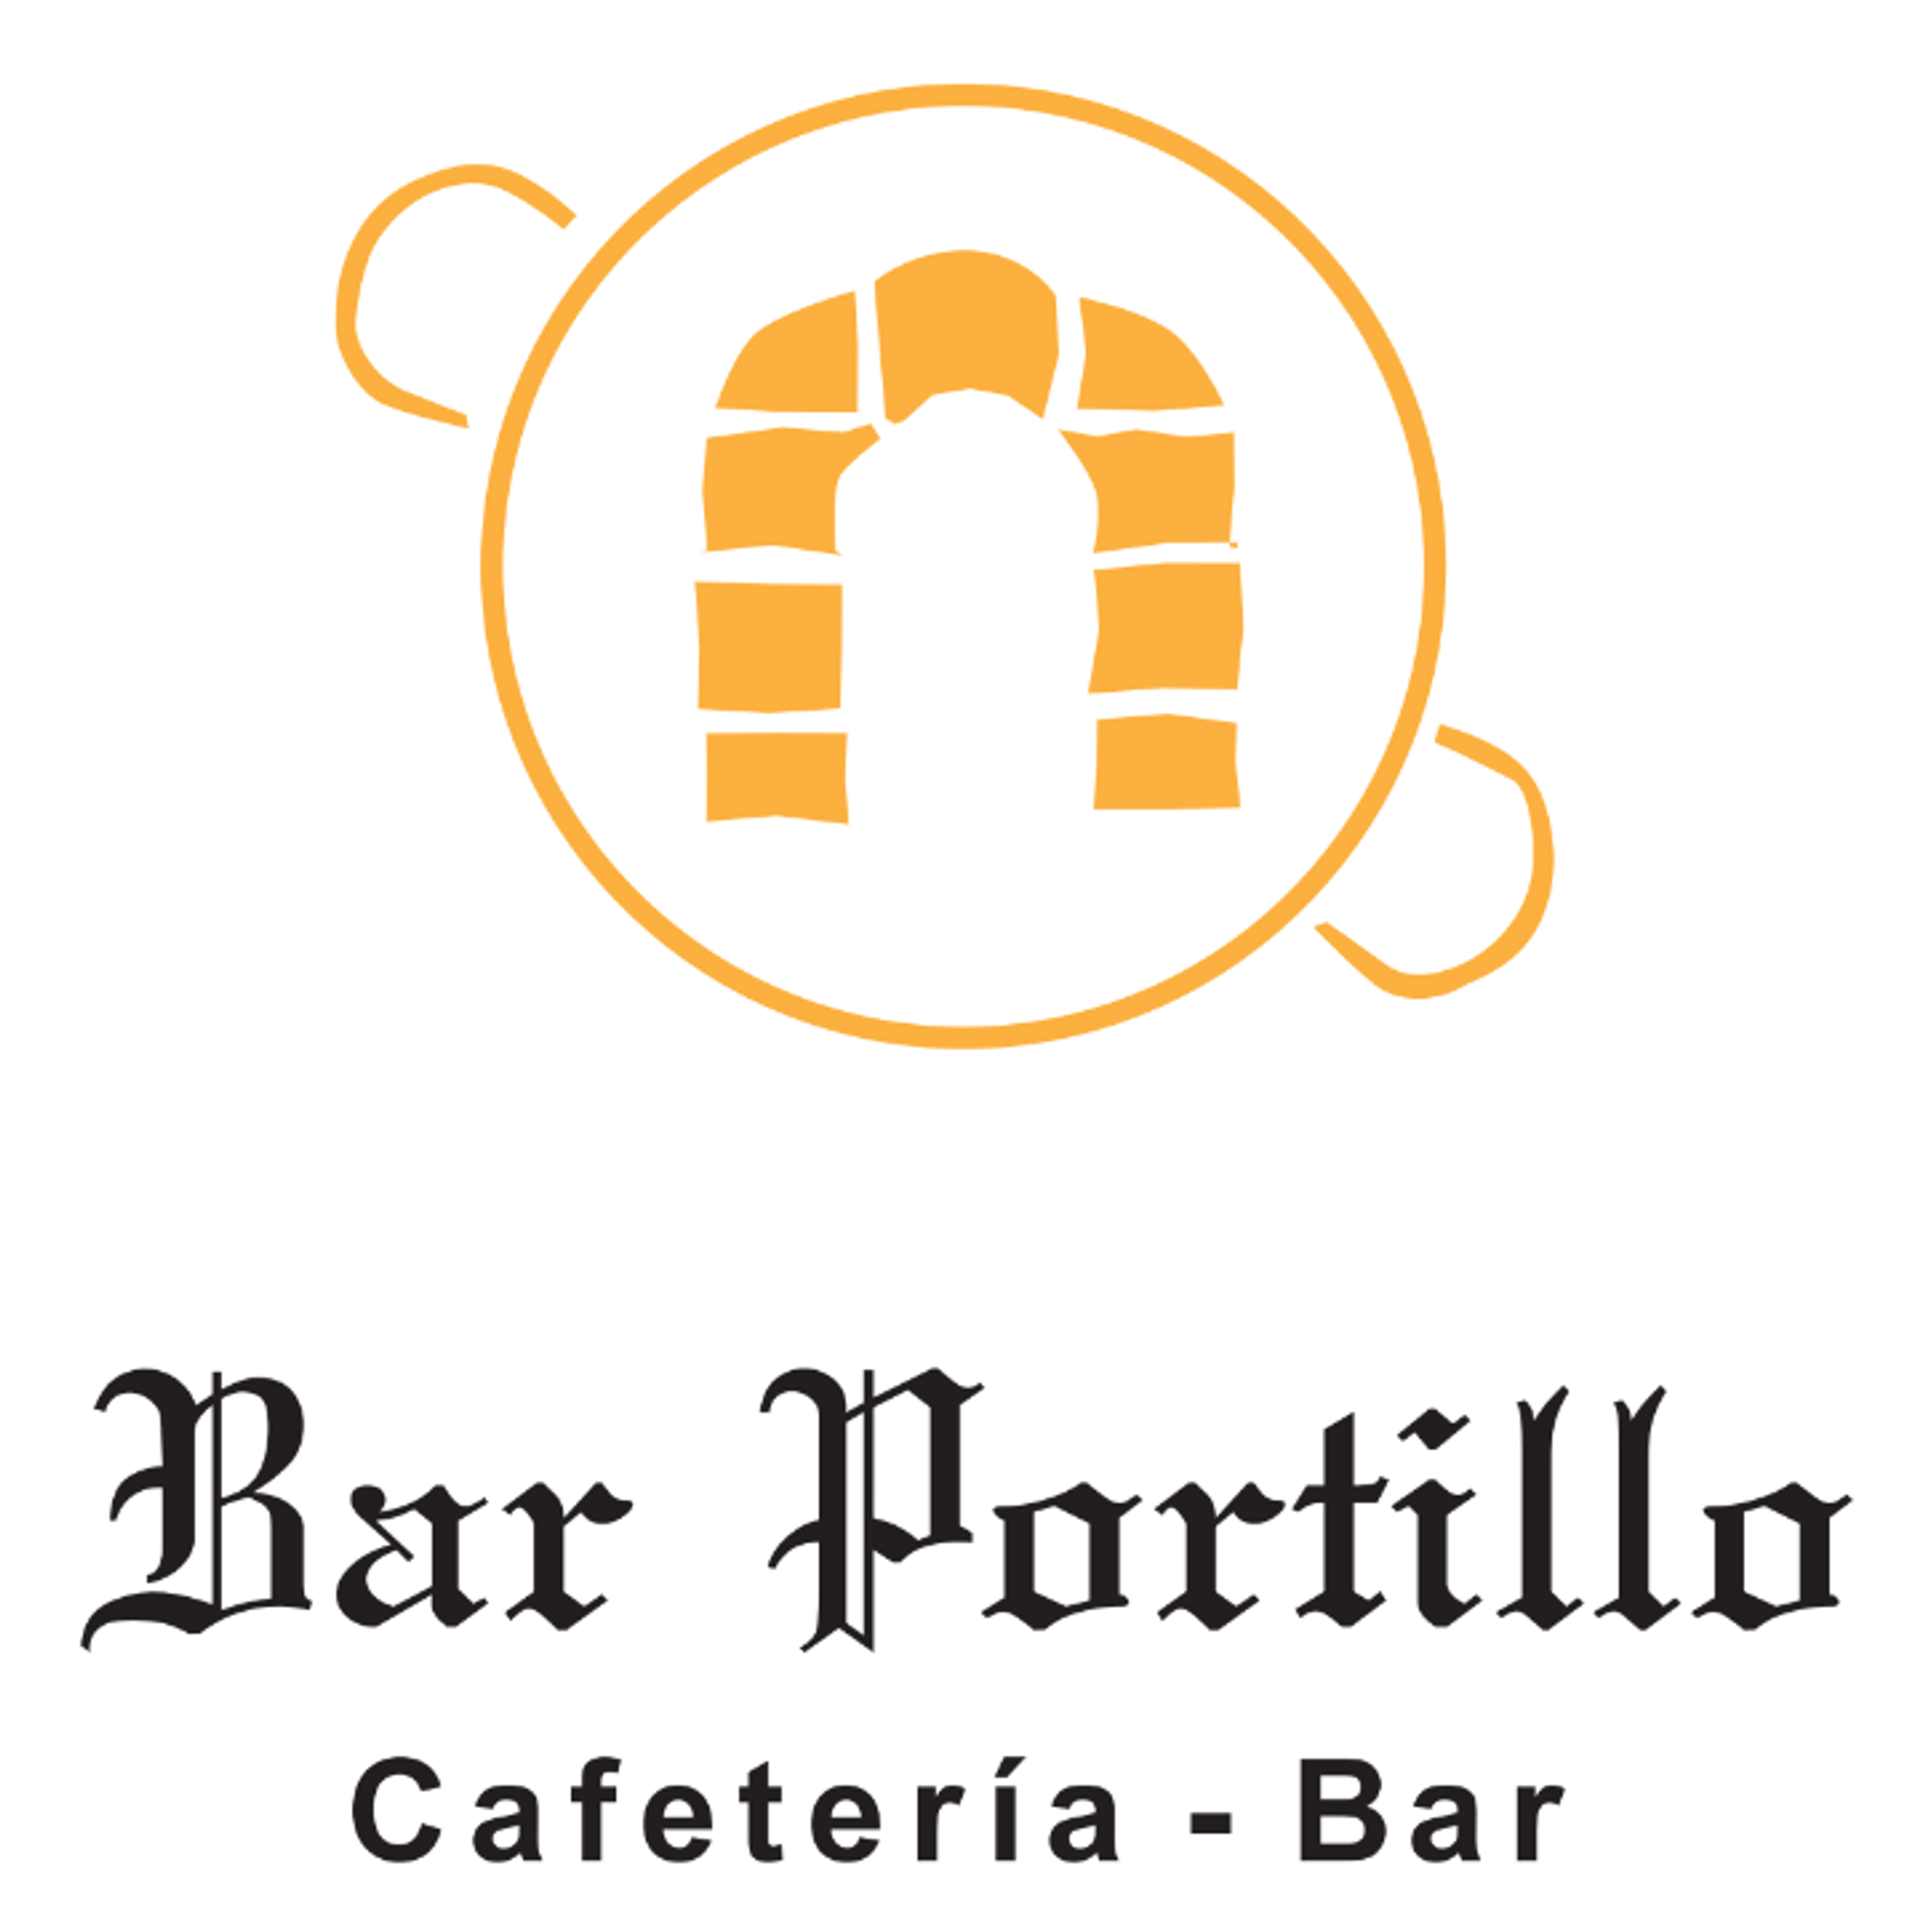 Bar Portillo バル ポルティージョ